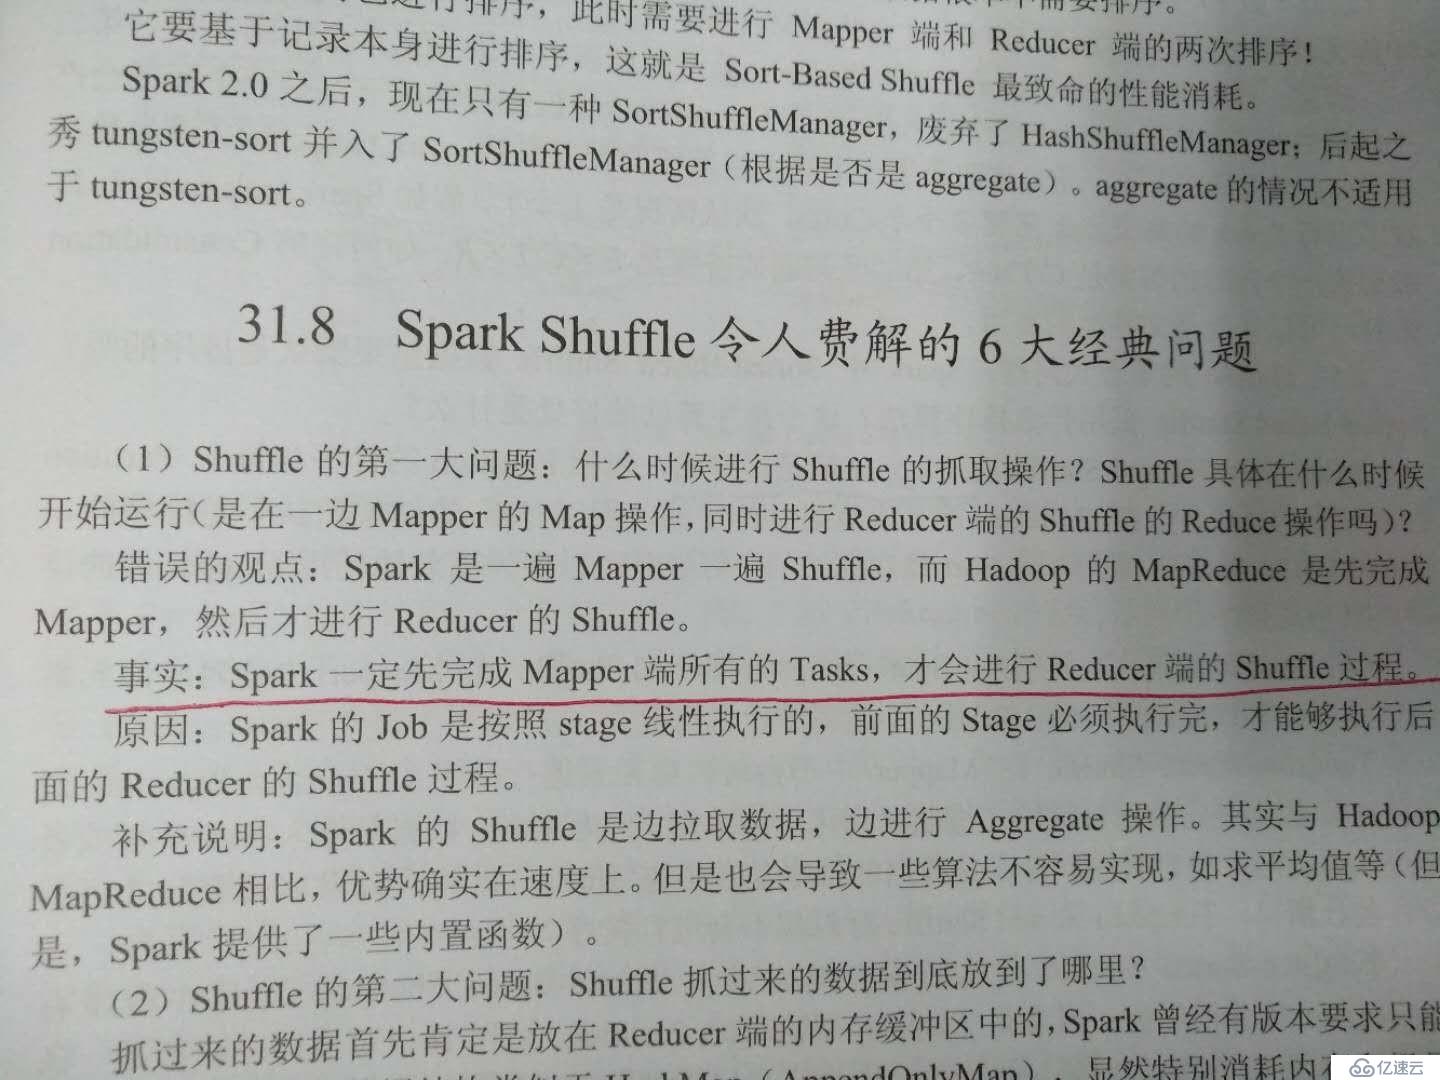 【Spark】Spark什么时候进行Shuffle数据抓取